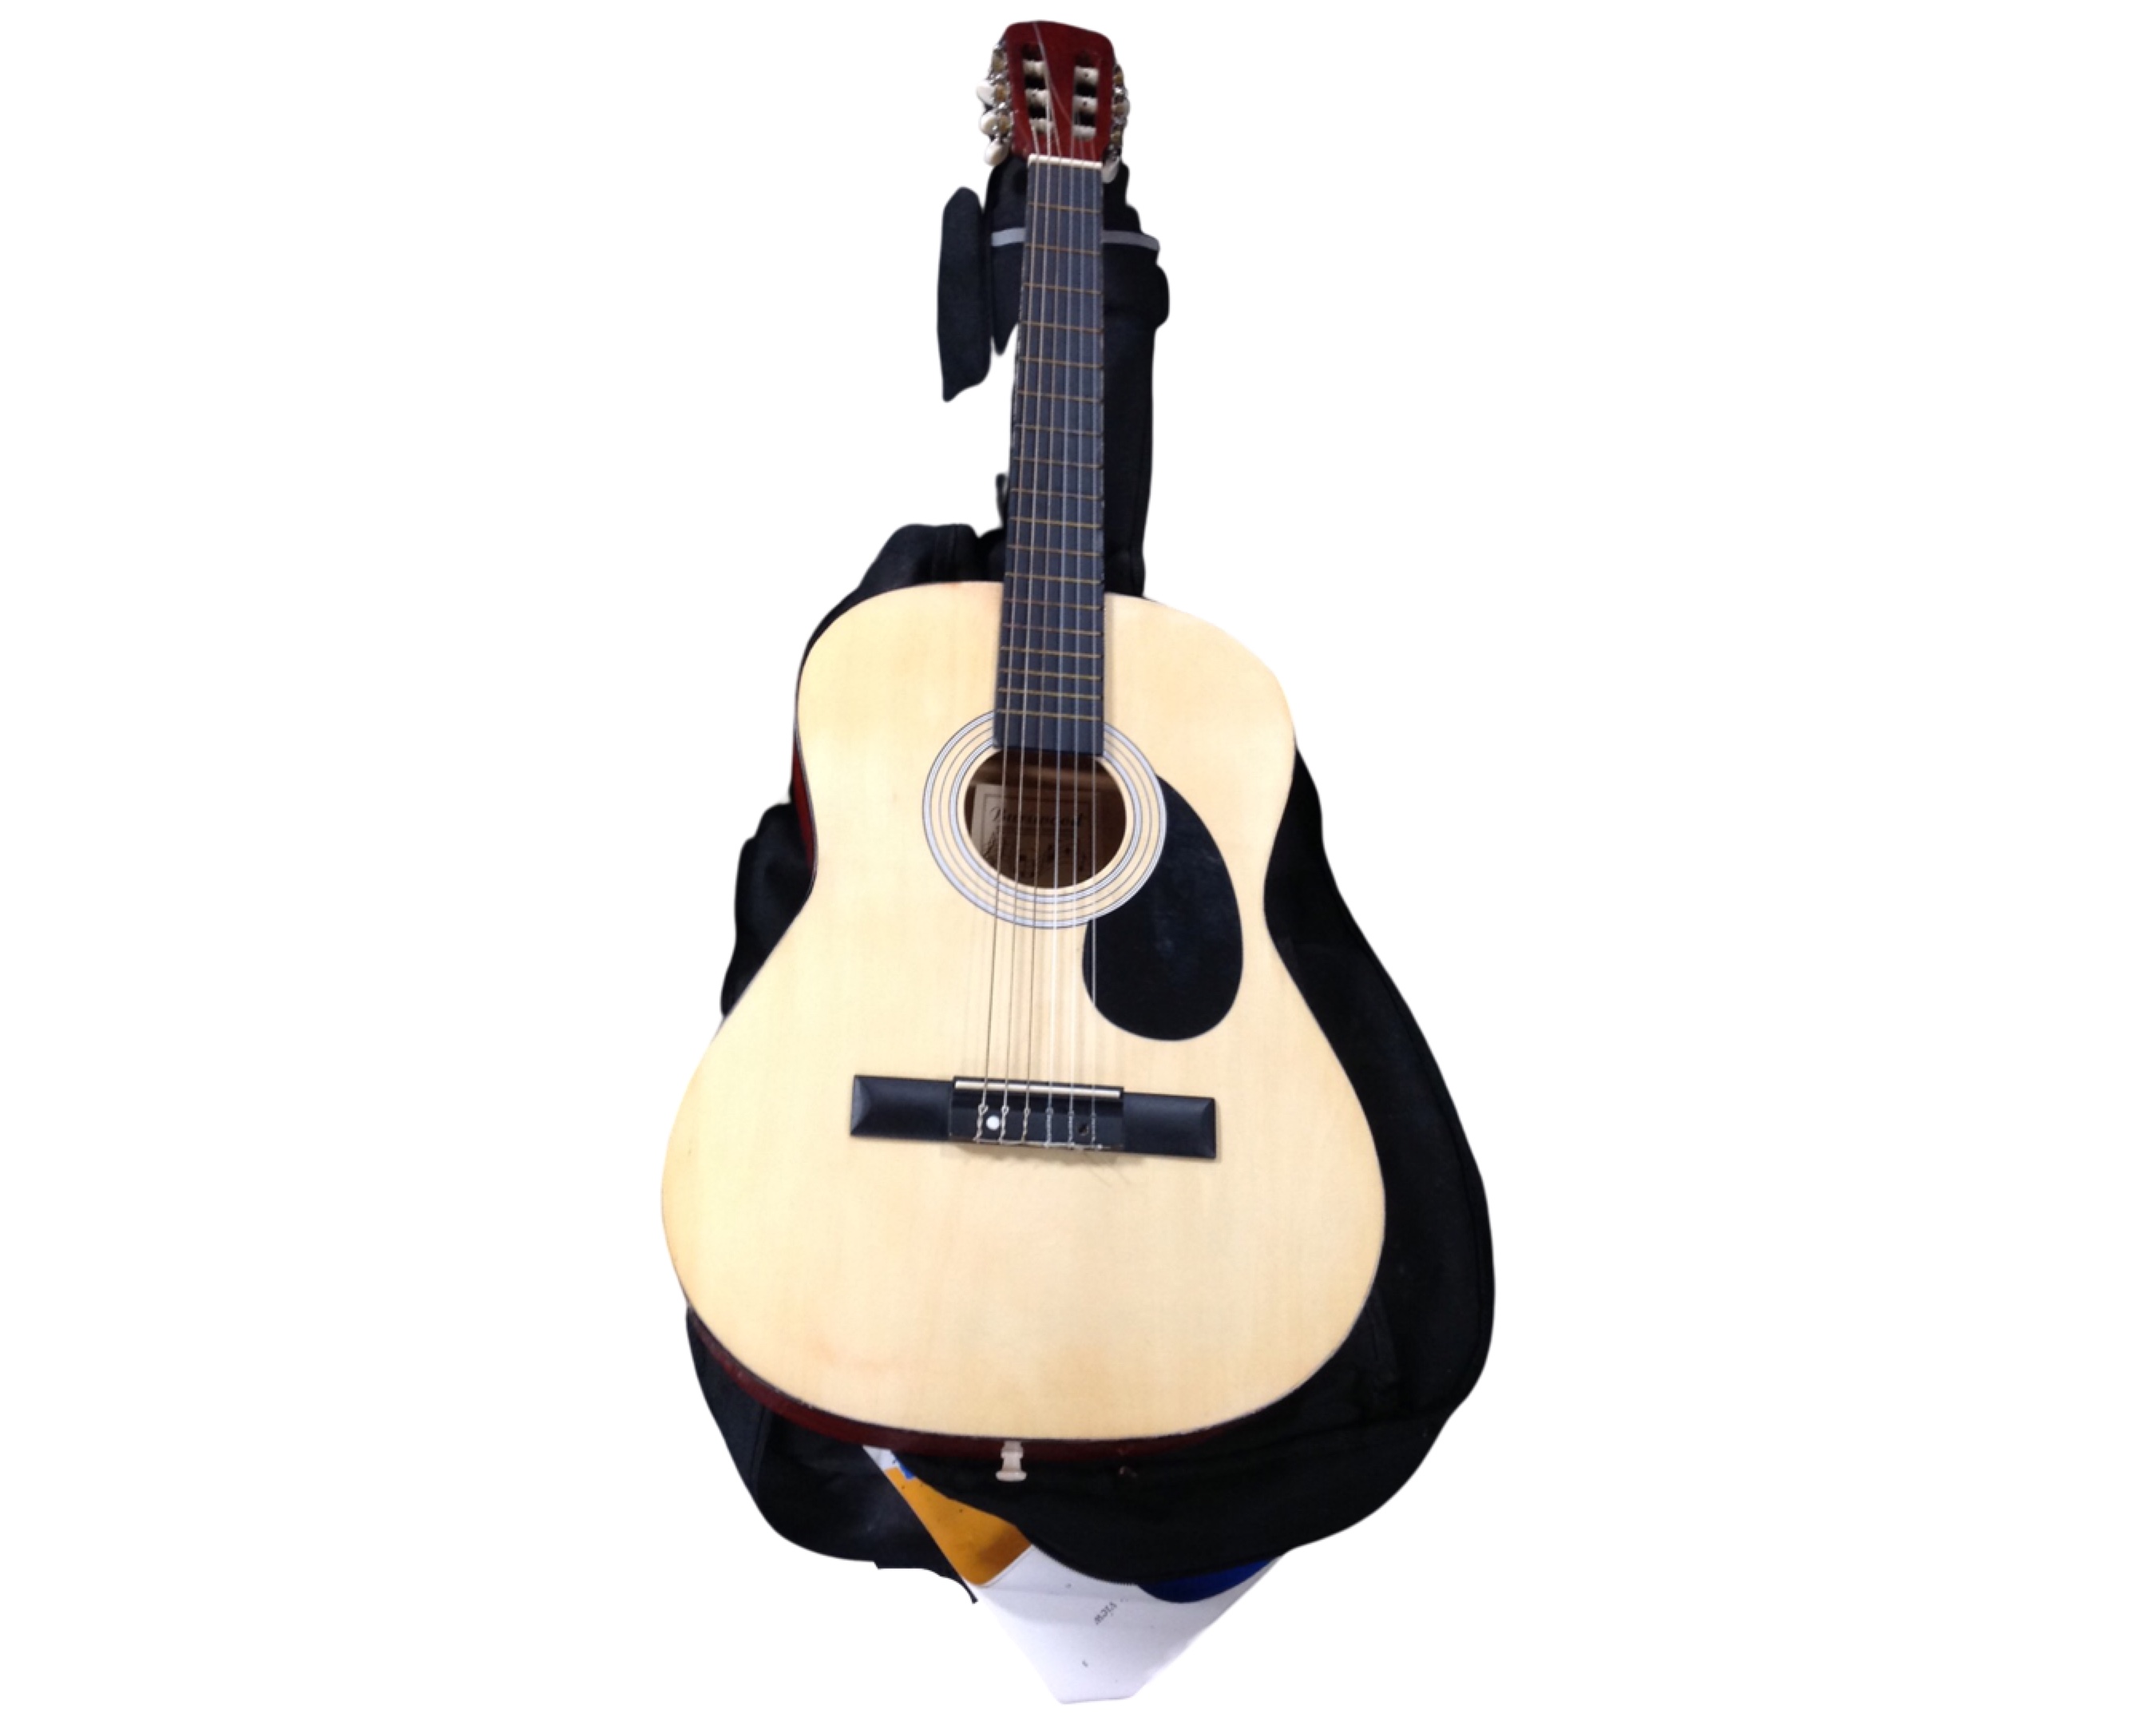 A Burwood acoustic guitar, model JC-36F, in soft carry case, together with a banjo ukulele, - Image 2 of 2